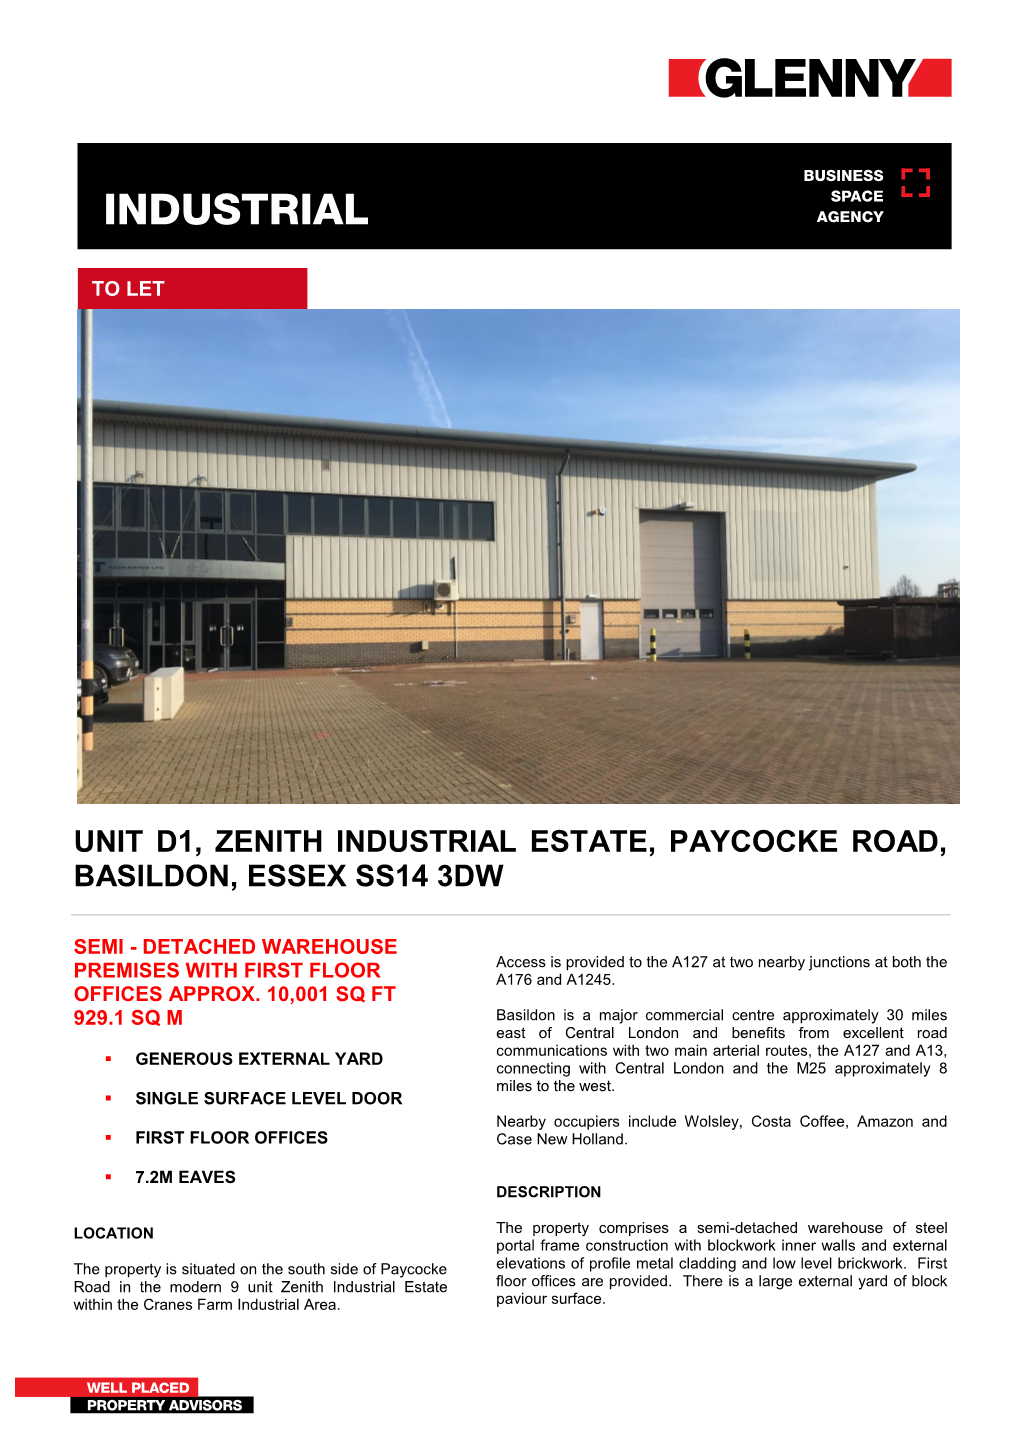 Unit D1, Zenith Industrial Estate, Paycocke Road, Basildon, Essex Ss14 3Dw